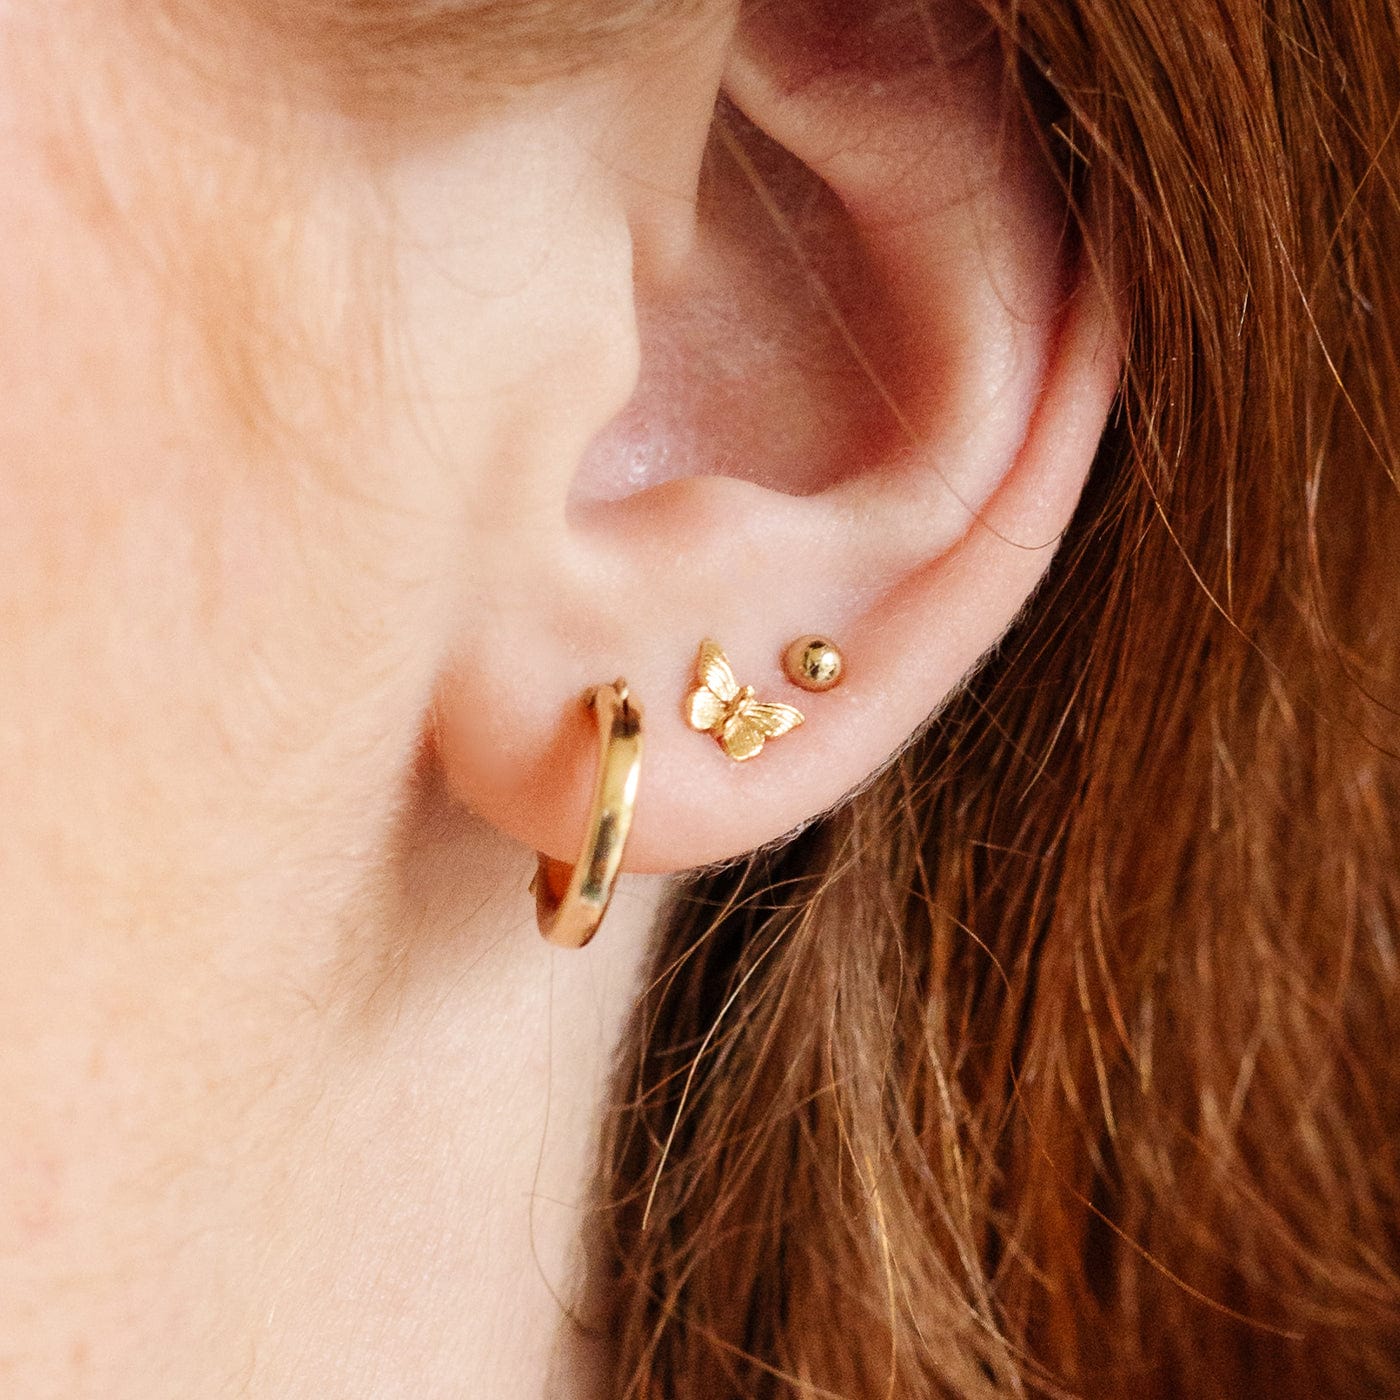 Buy Now Stud earrings for Women @ Best Price